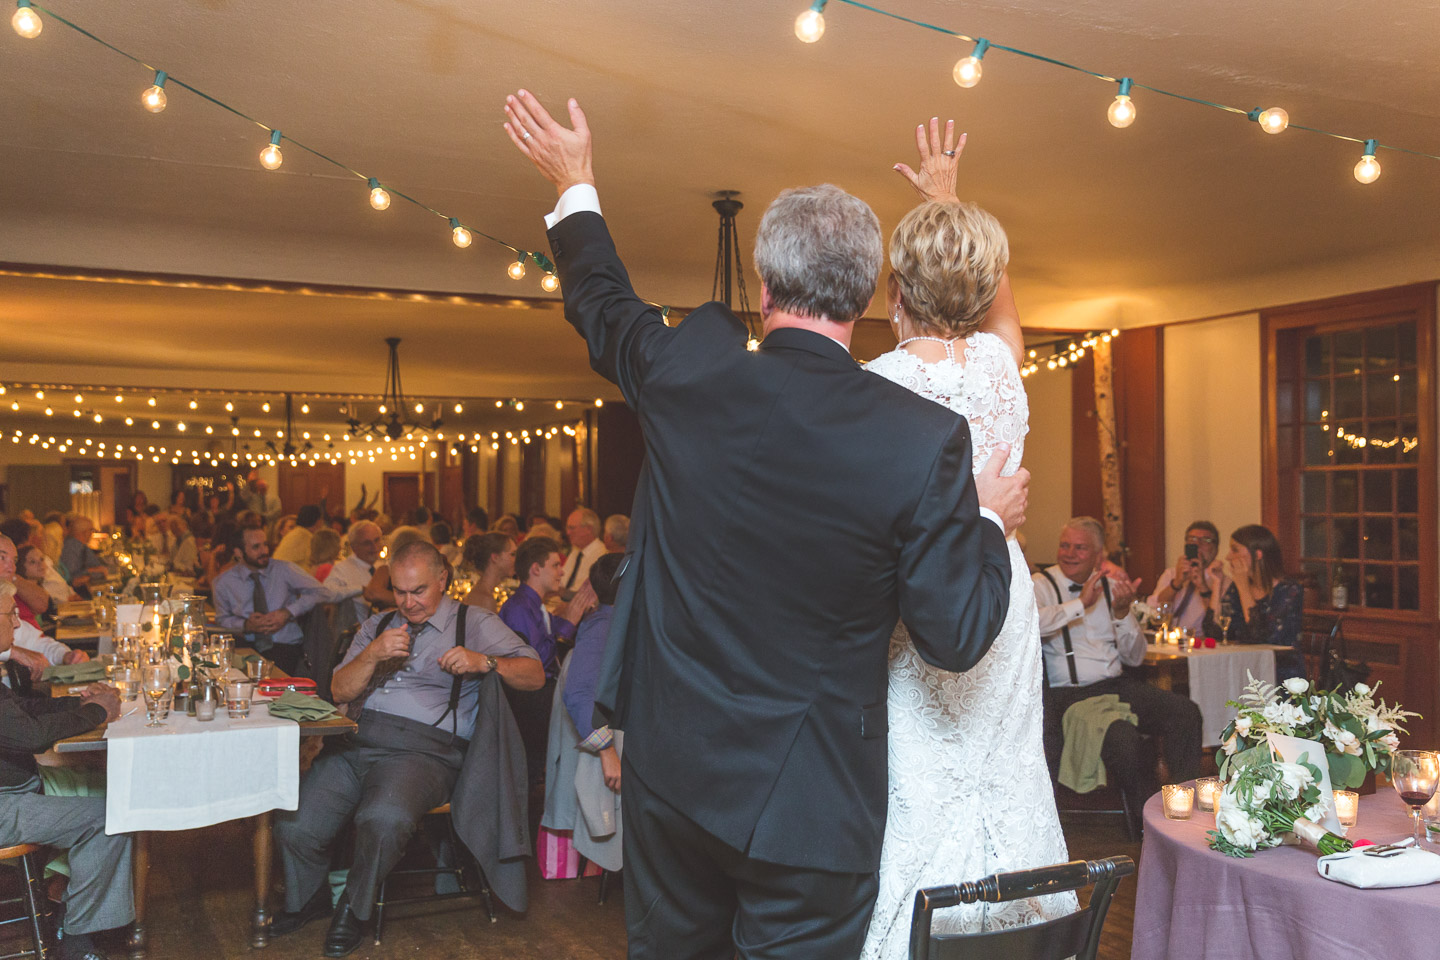 Weddings-Dearborn-Michigan-Greenfield-Village-Eagle-Tavern-Bride-Groom-First-Greet-Guests